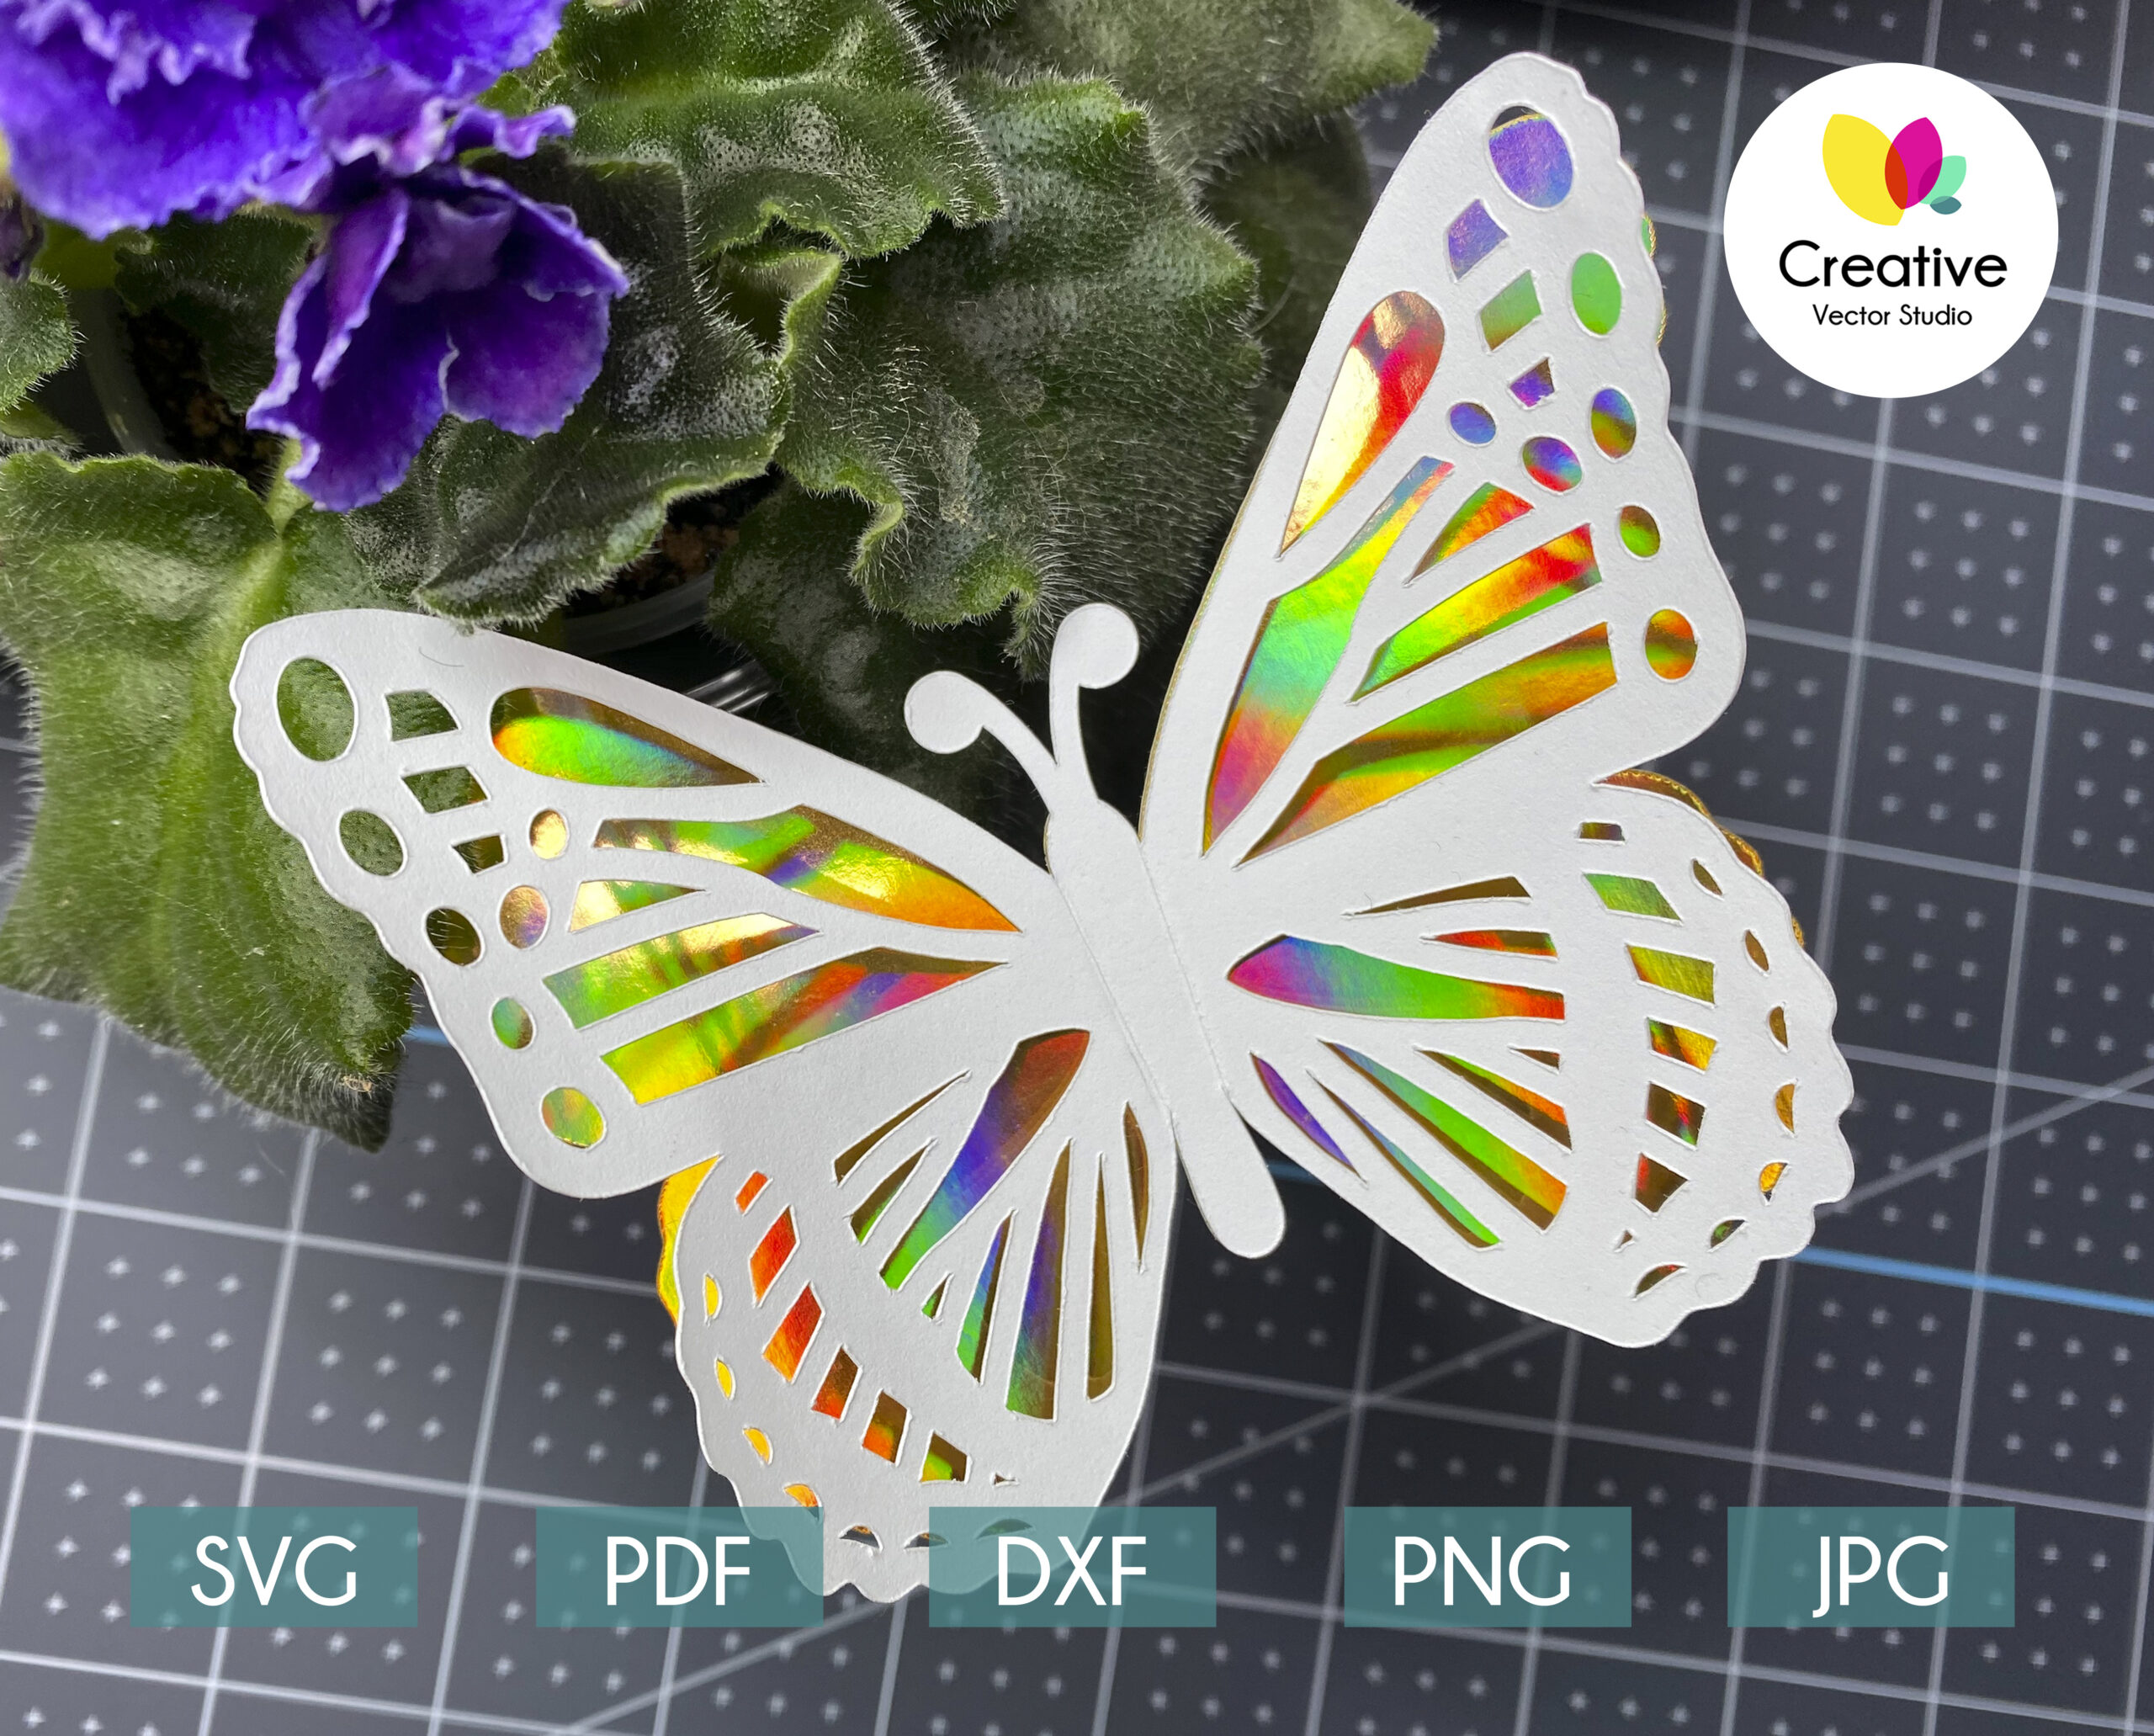 3D Butterfly SVG #1 Cutting Template - Creative Vector Studio